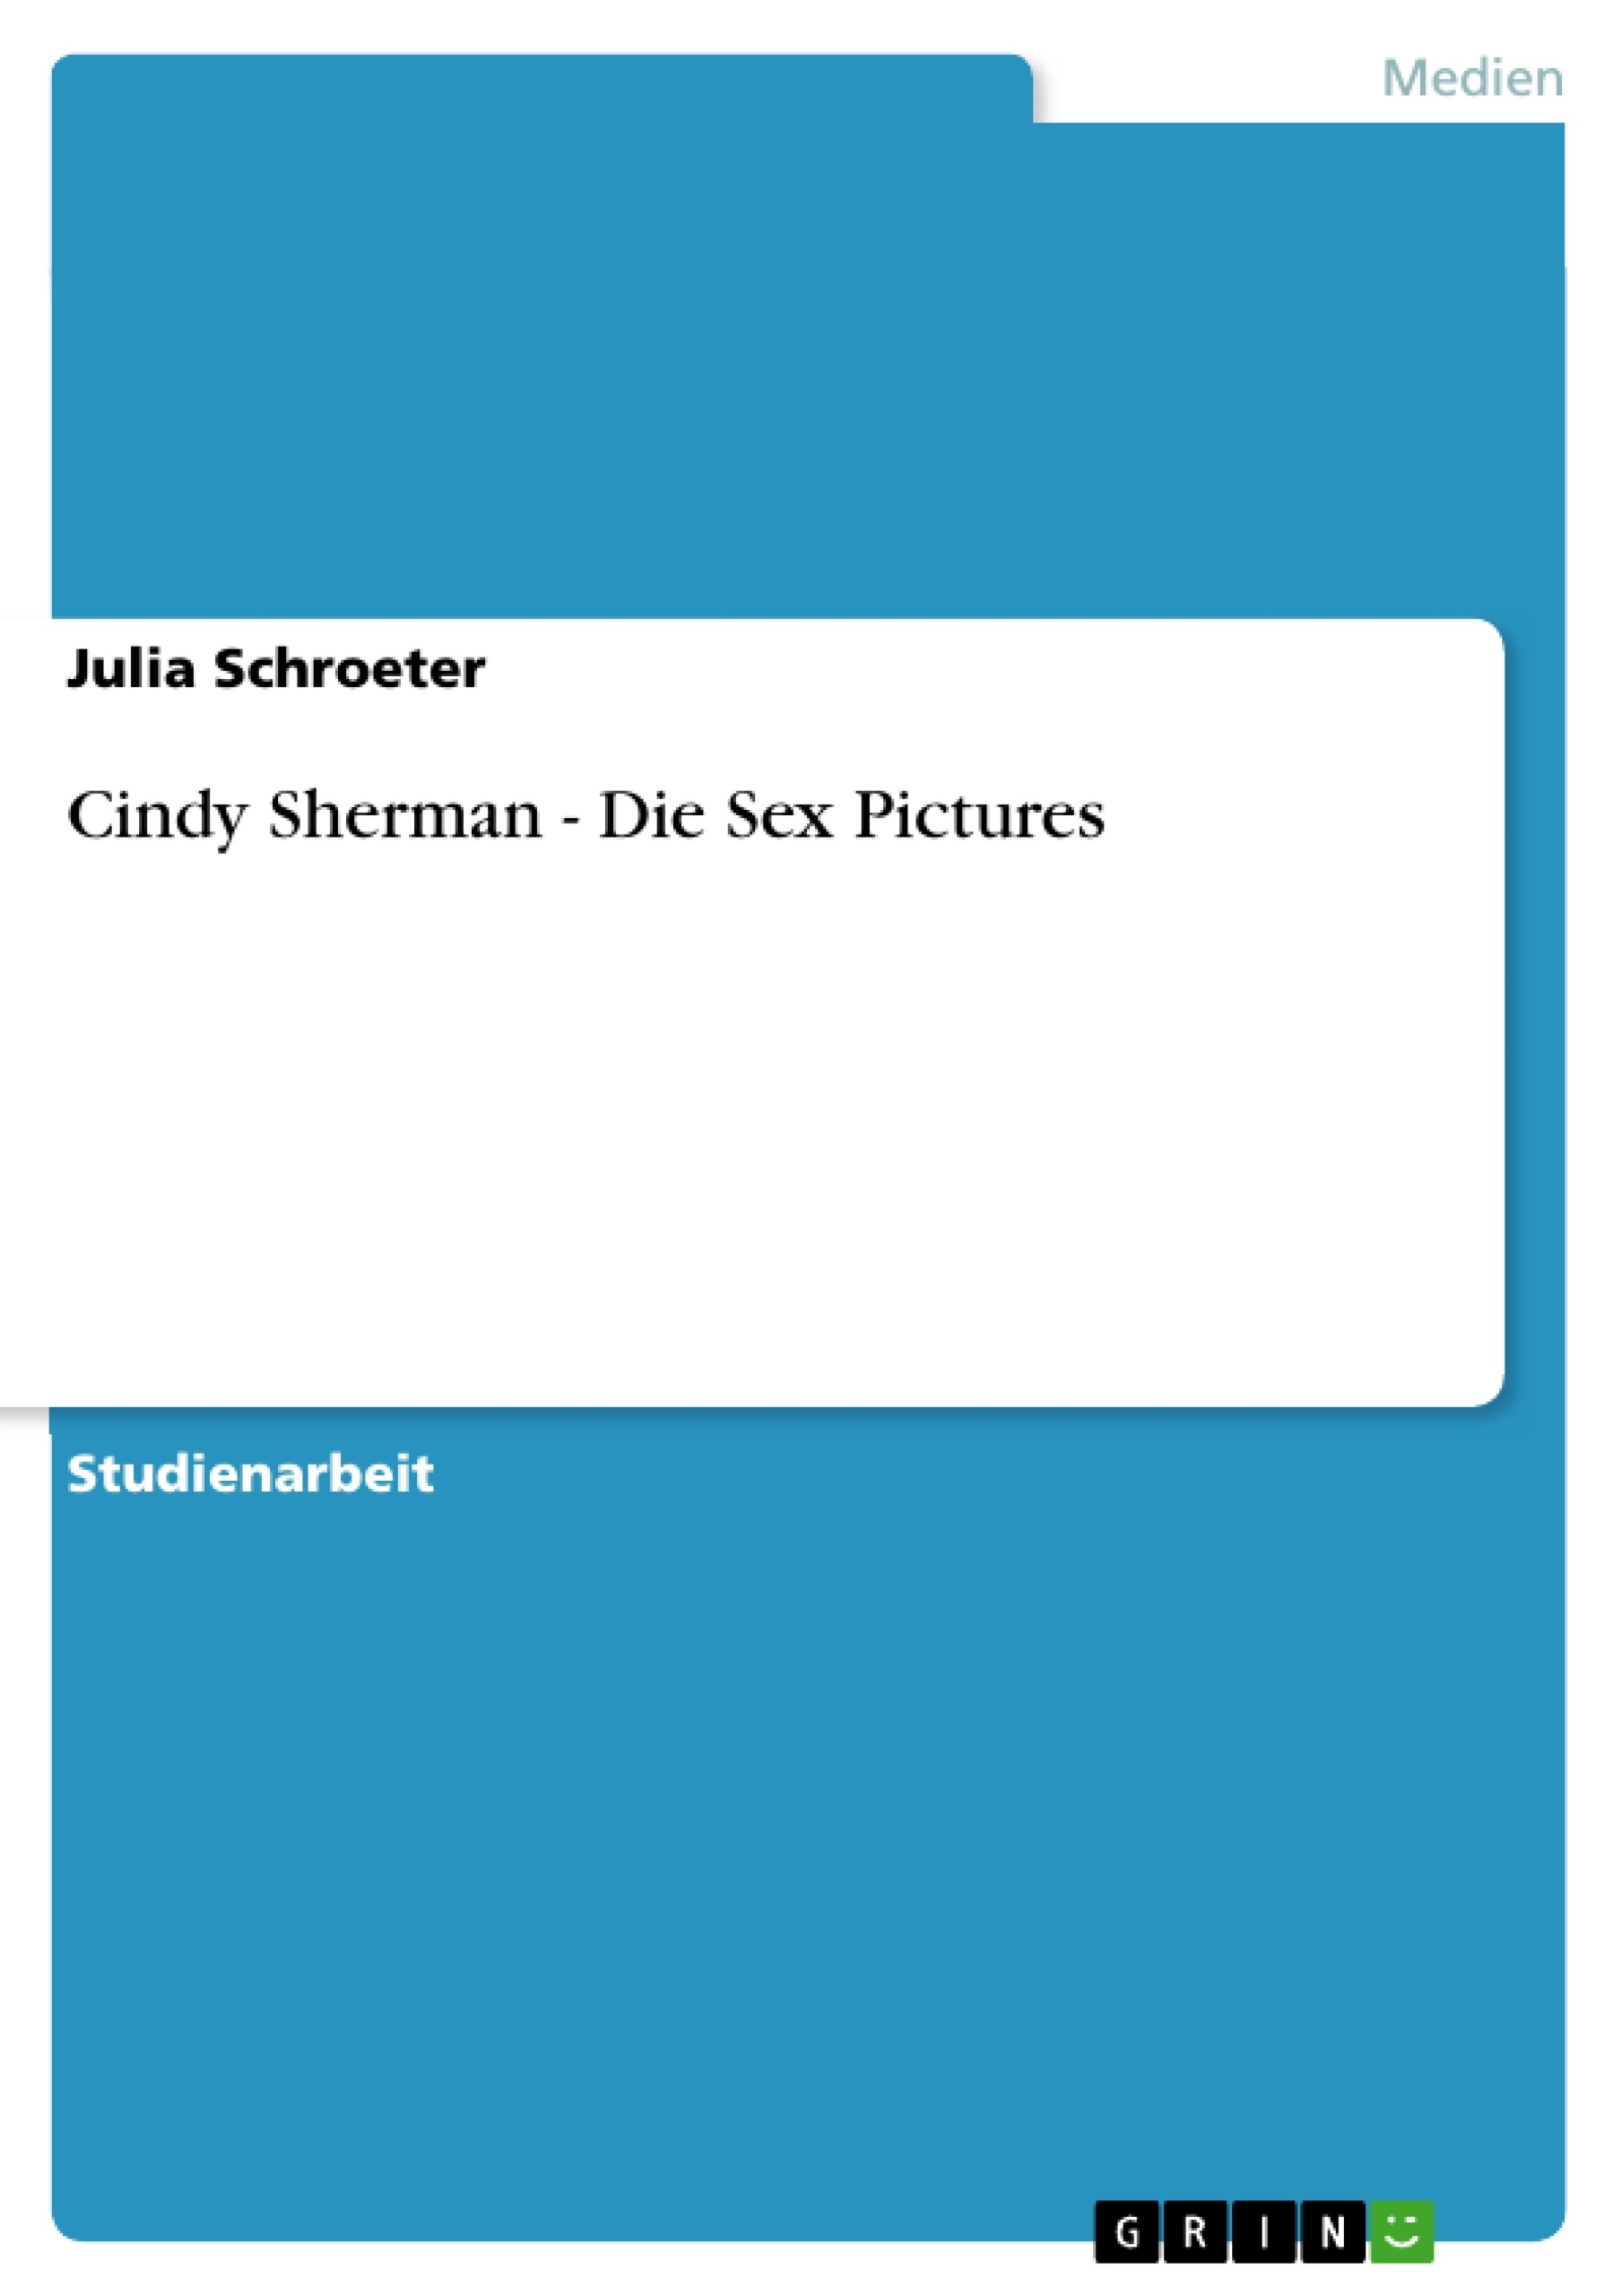 Titre: Cindy Sherman - Die Sex Pictures